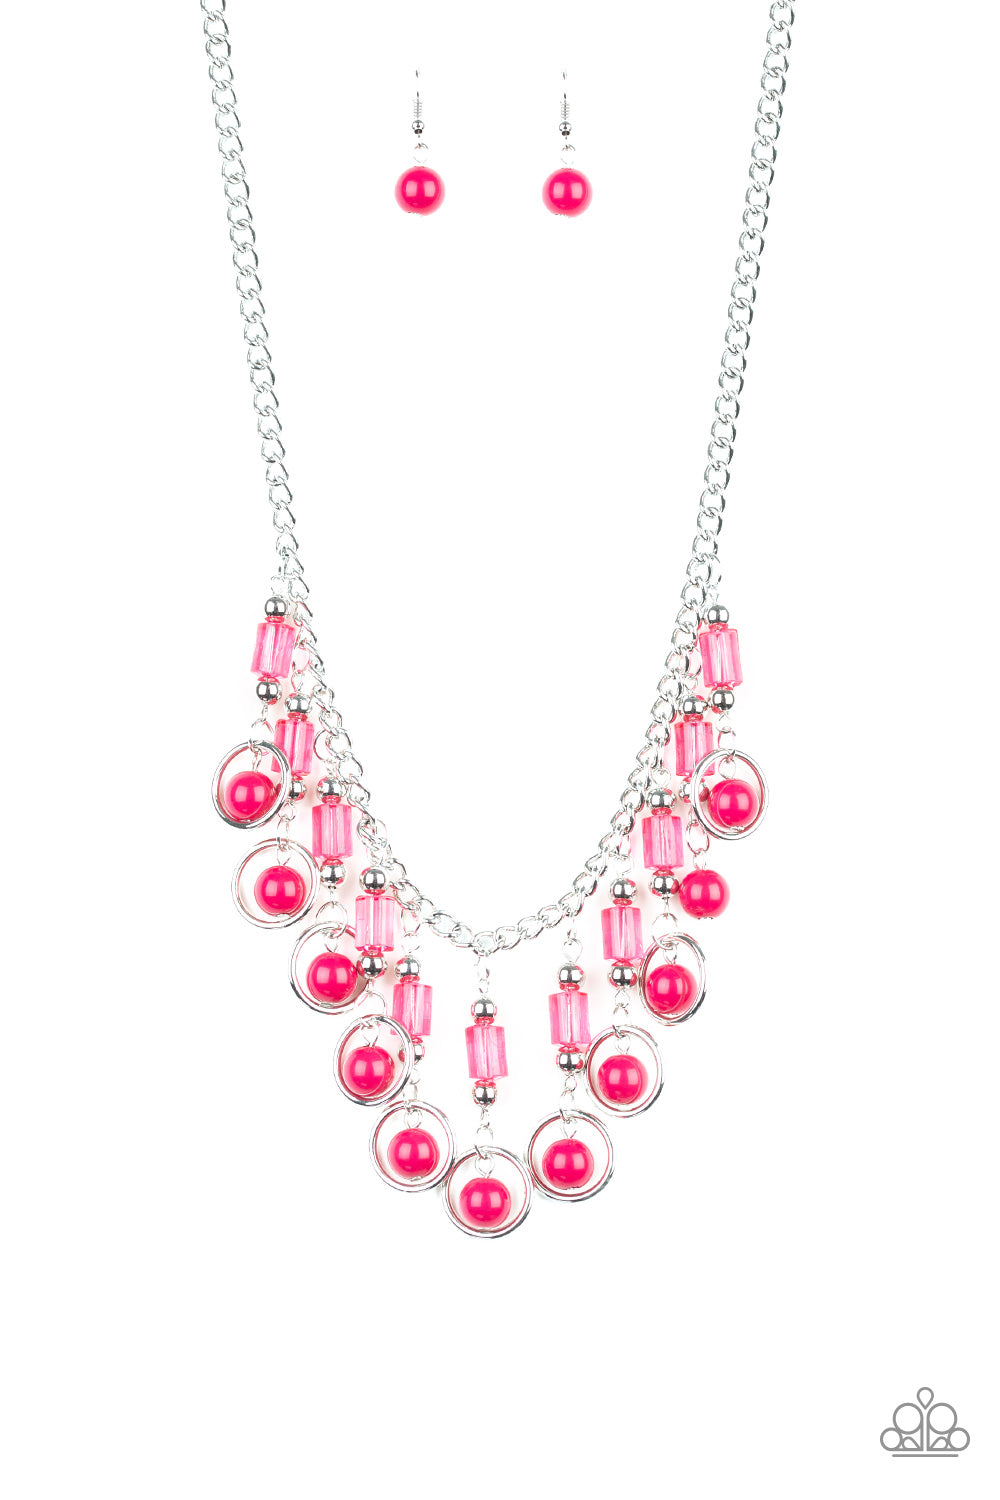 Cool Cascade Pink Paparazzi Necklace Cashmere Pink Jewels - Cashmere Pink Jewels & Accessories, Cashmere Pink Jewels & Accessories - Paparazzi